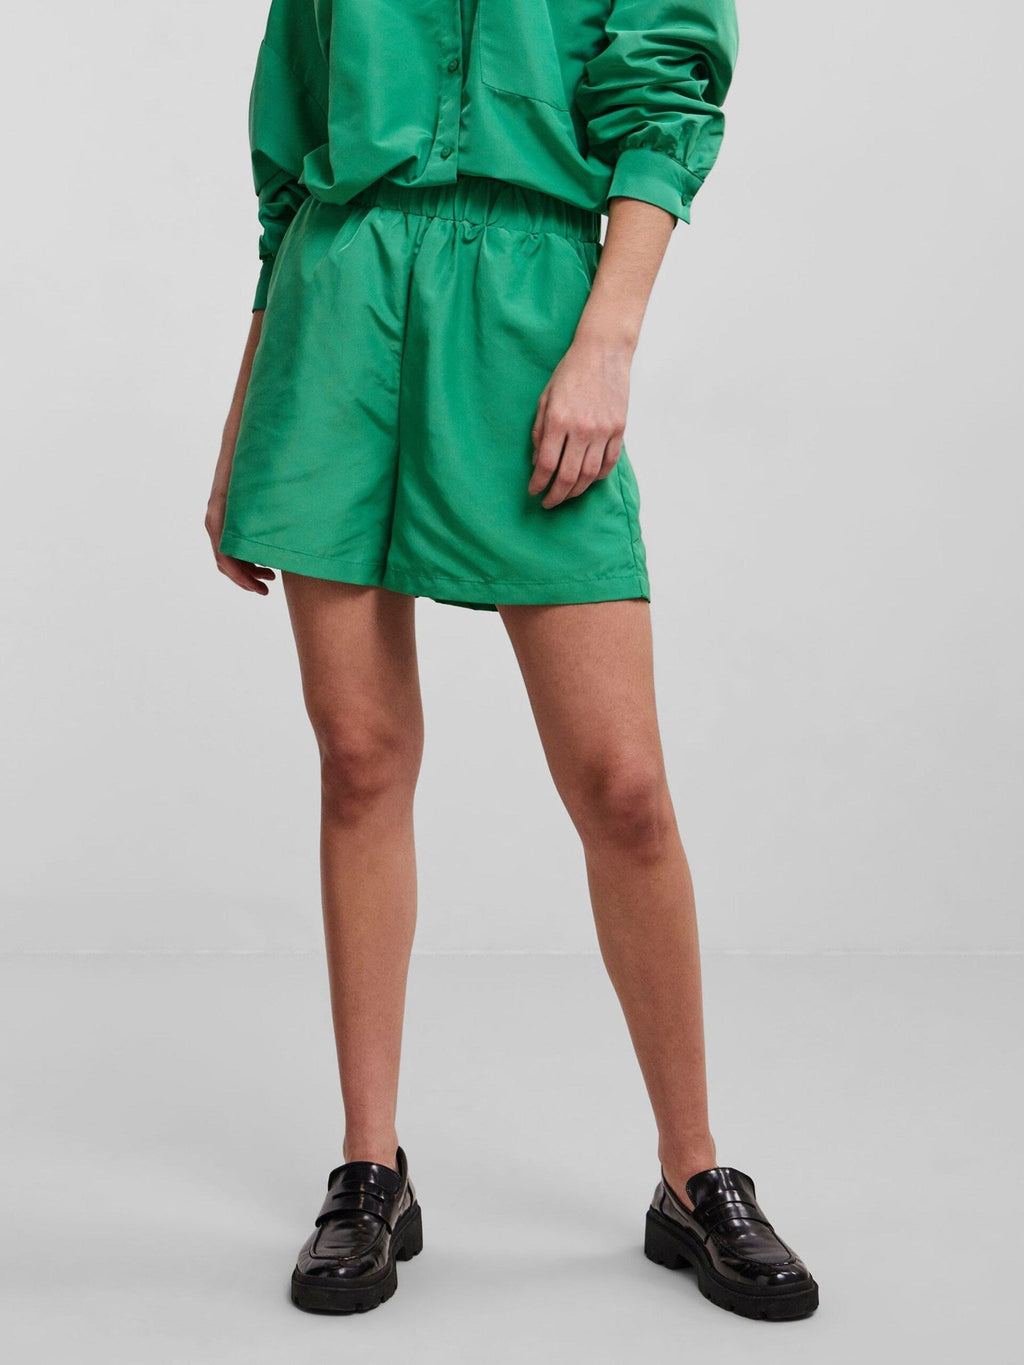 Chrilina High Taille Shorts - Einfaches Grün